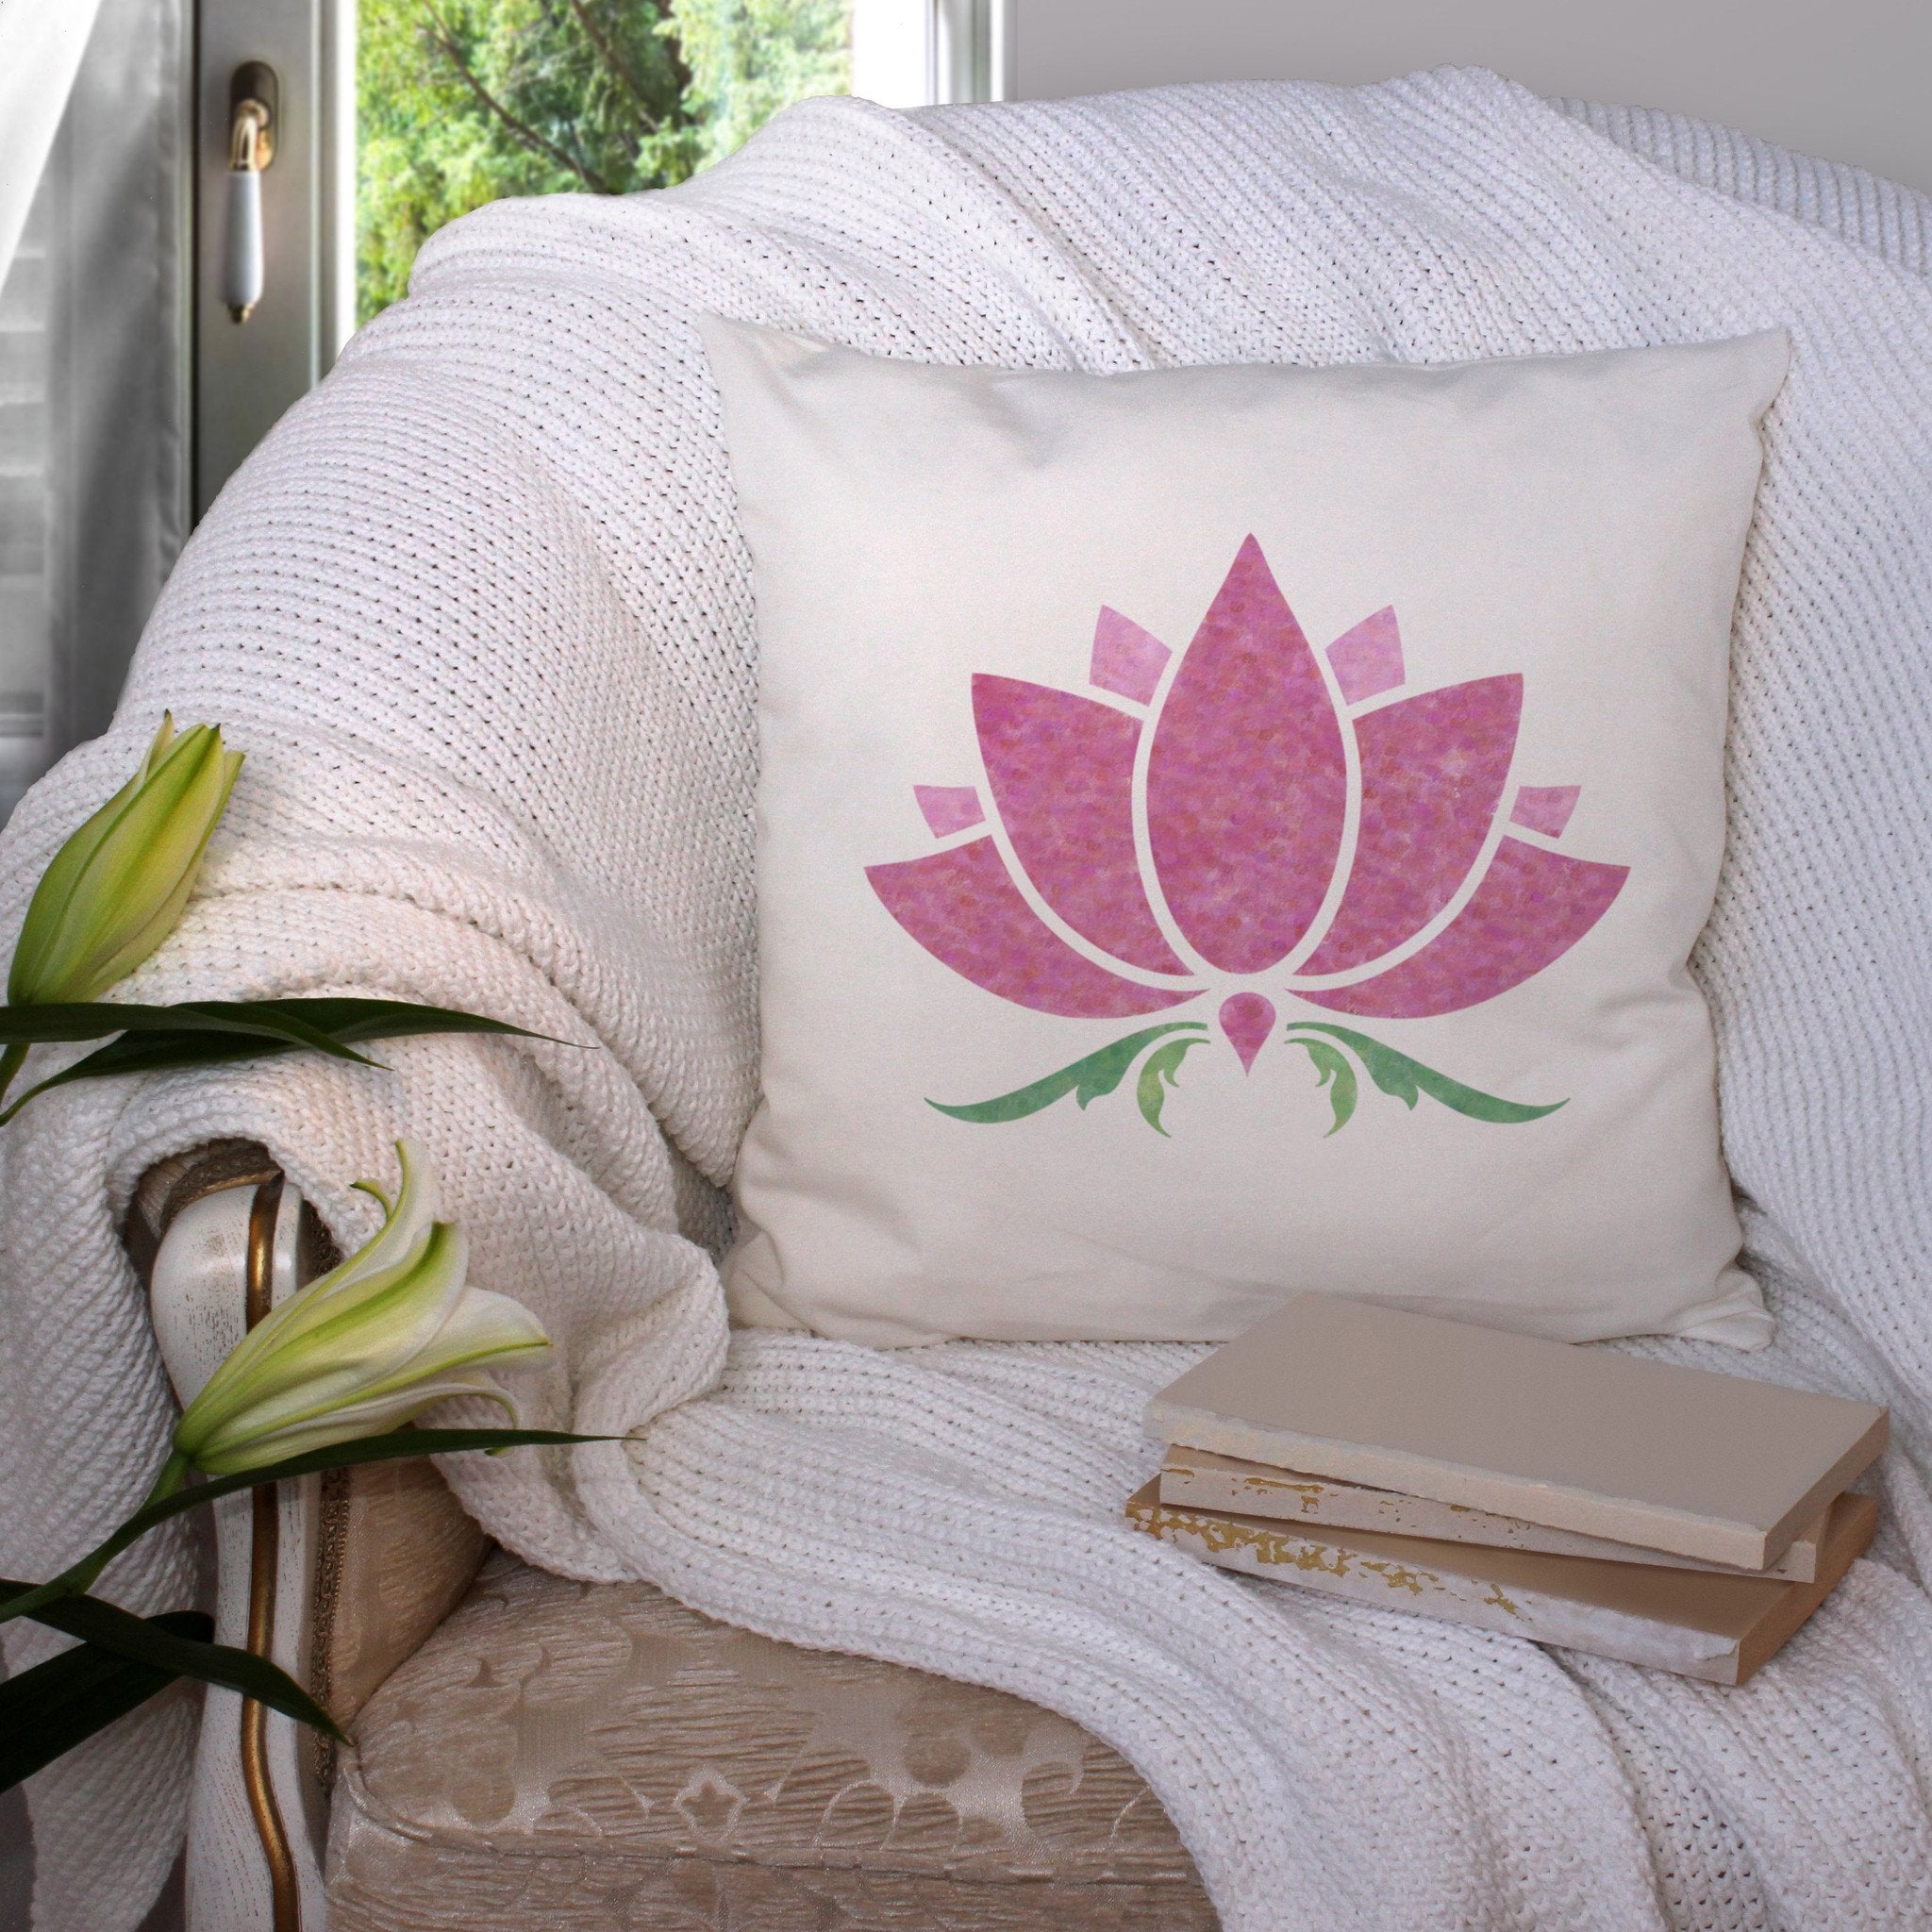 CraftStar Lotus Flower Stencil on fabric